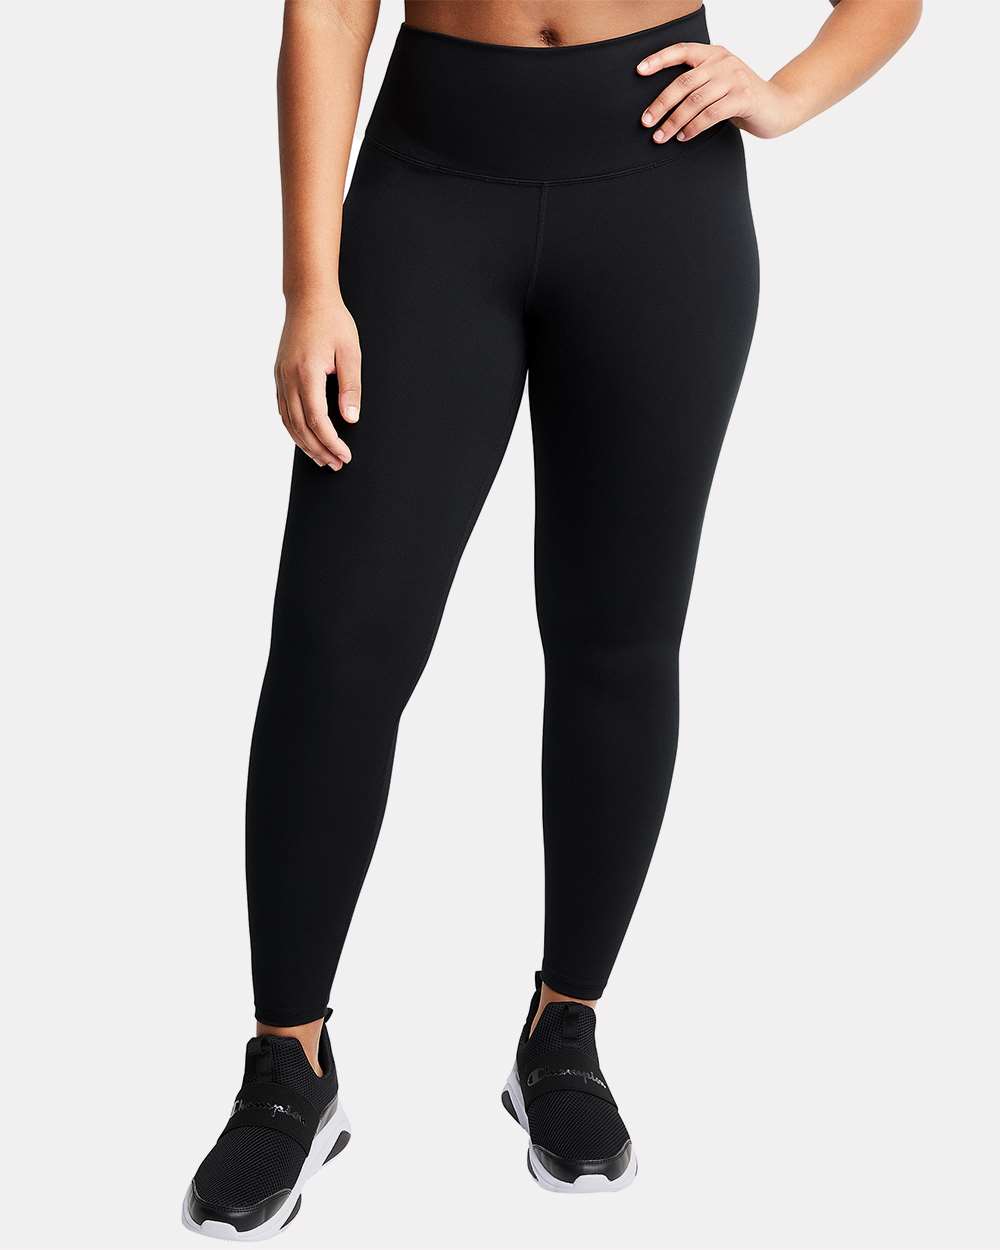 https://images.shirtspace.com/fullsize/JB%2F2P2QBBcntohlSKR%2BuTA%3D%3D/433930/20201-champion-chp120-women-s-sport-soft-touch-leggings-front-black.jpg